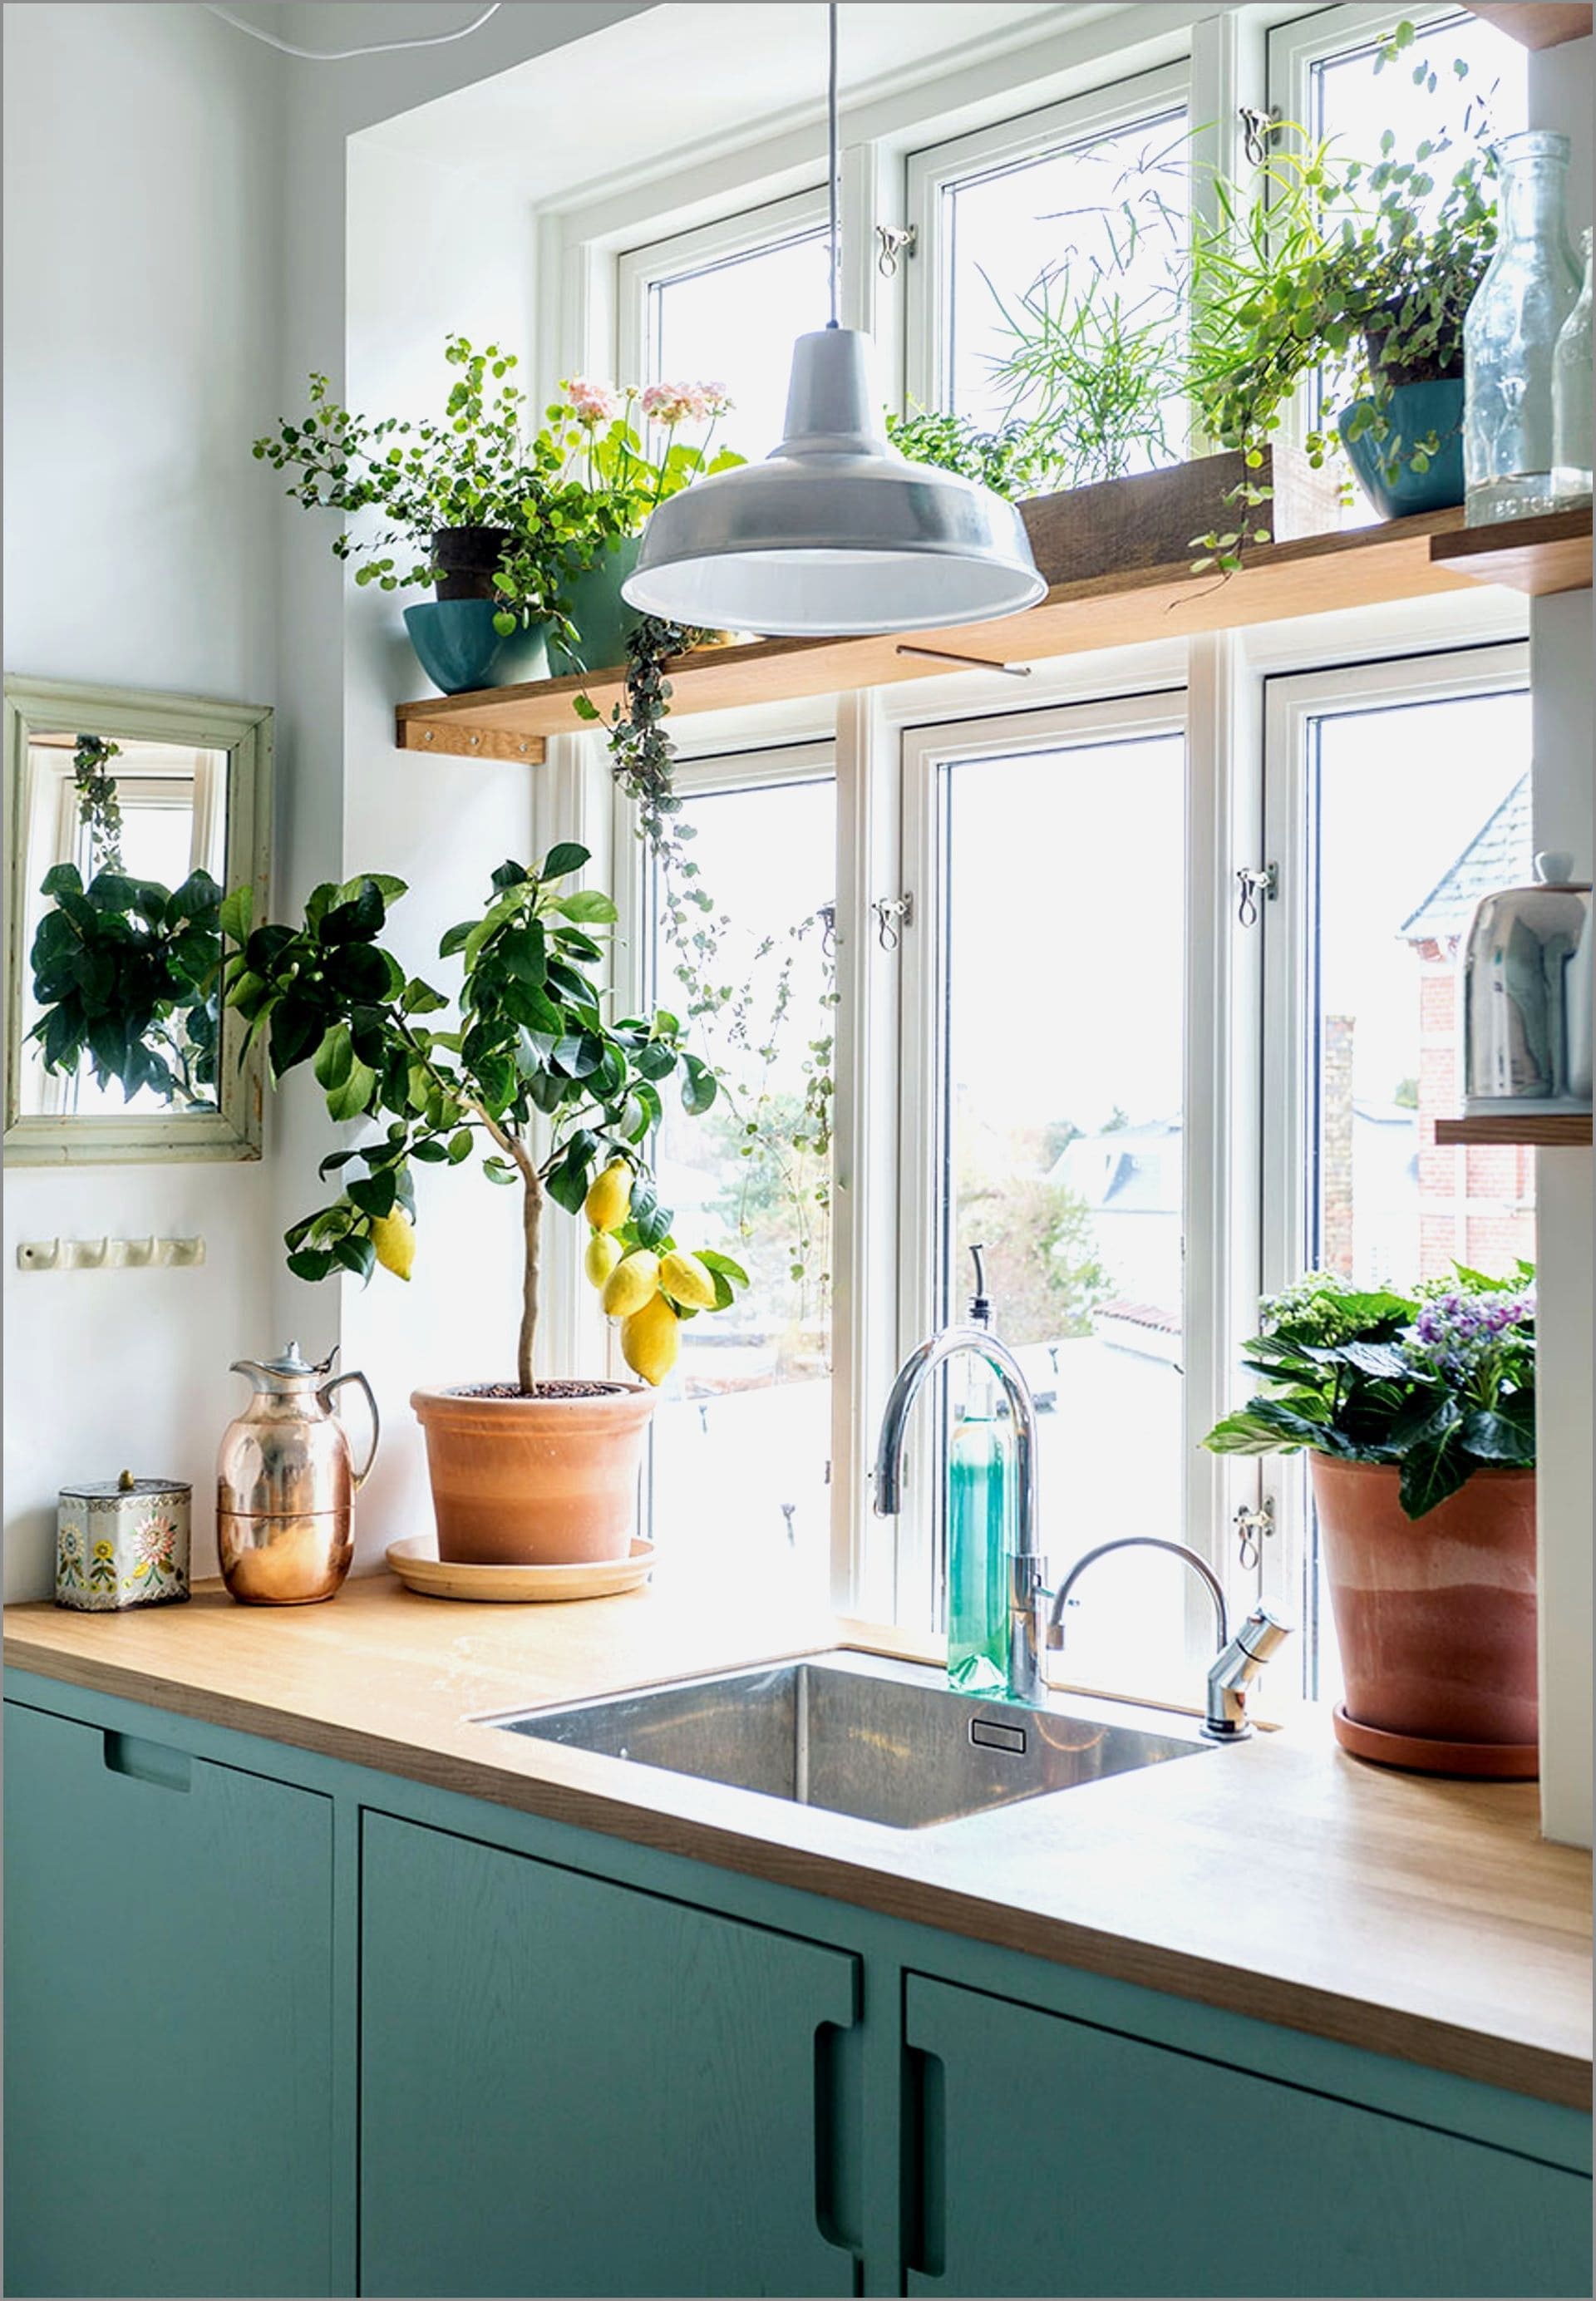 25 creative kitchen window decor ideas you'll fall for - 73